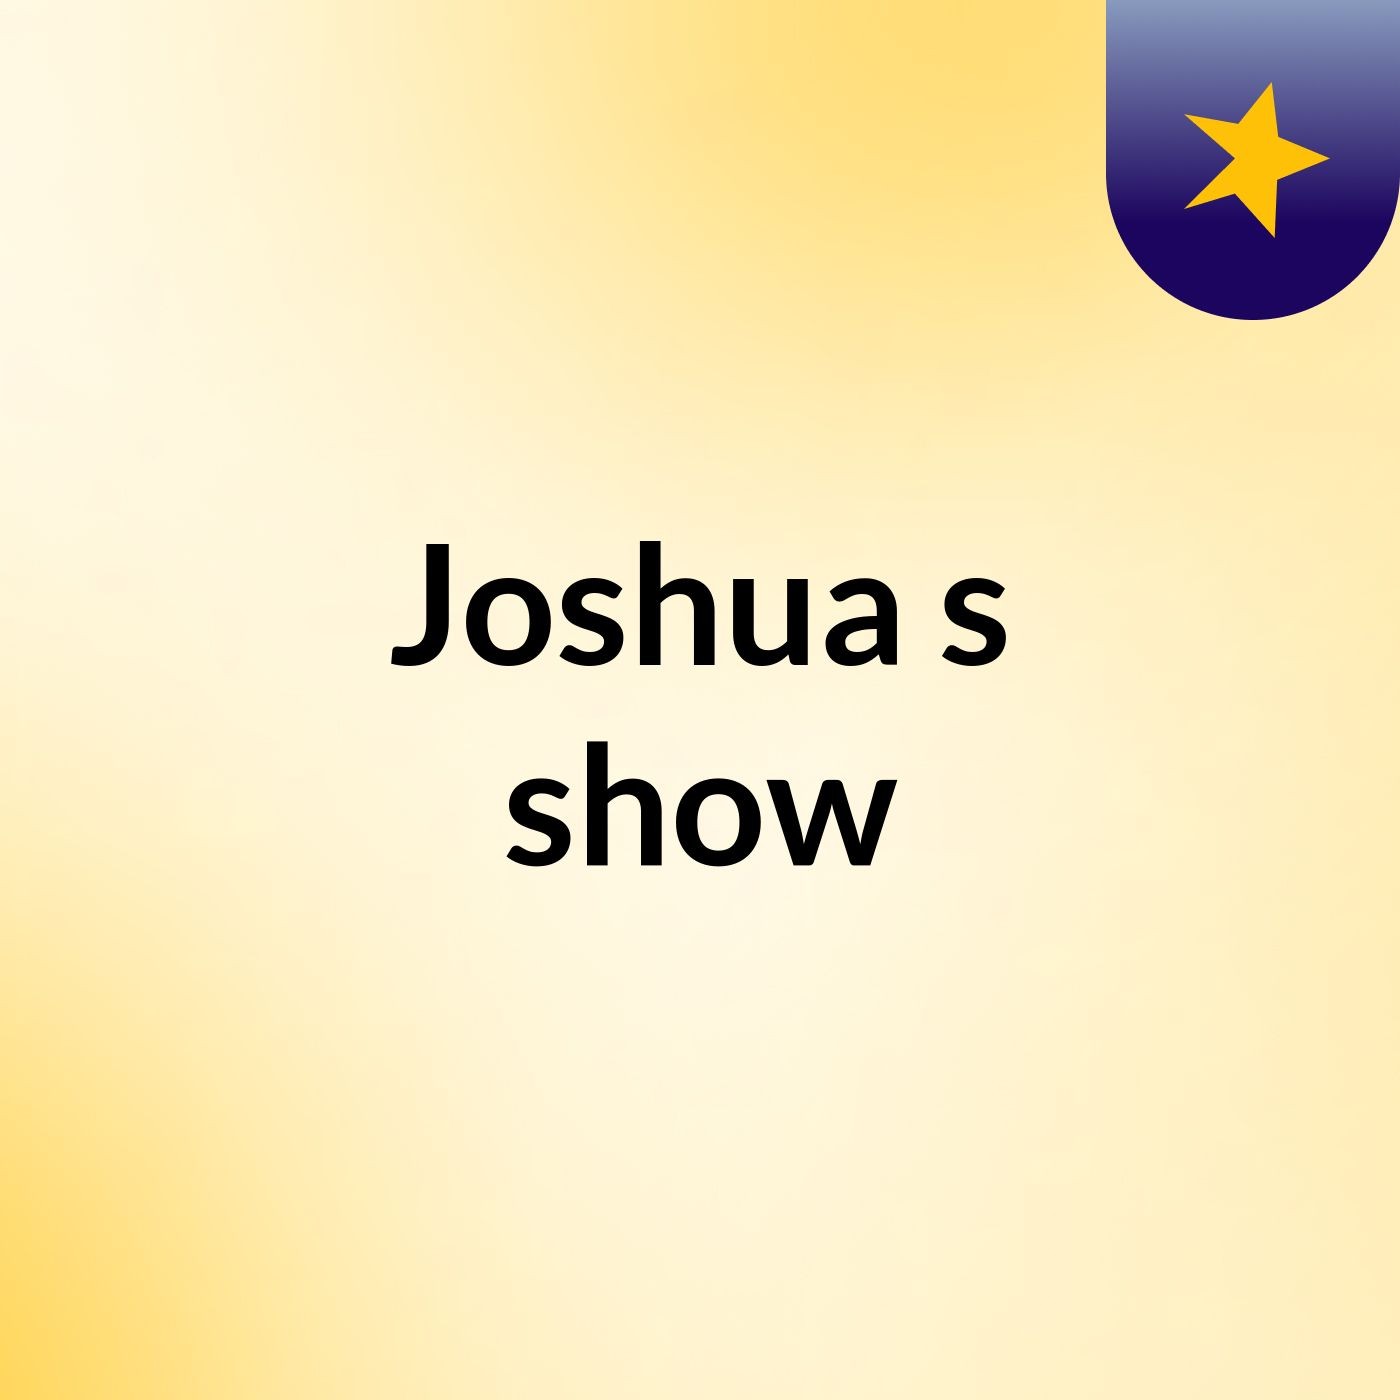 Joshua's show